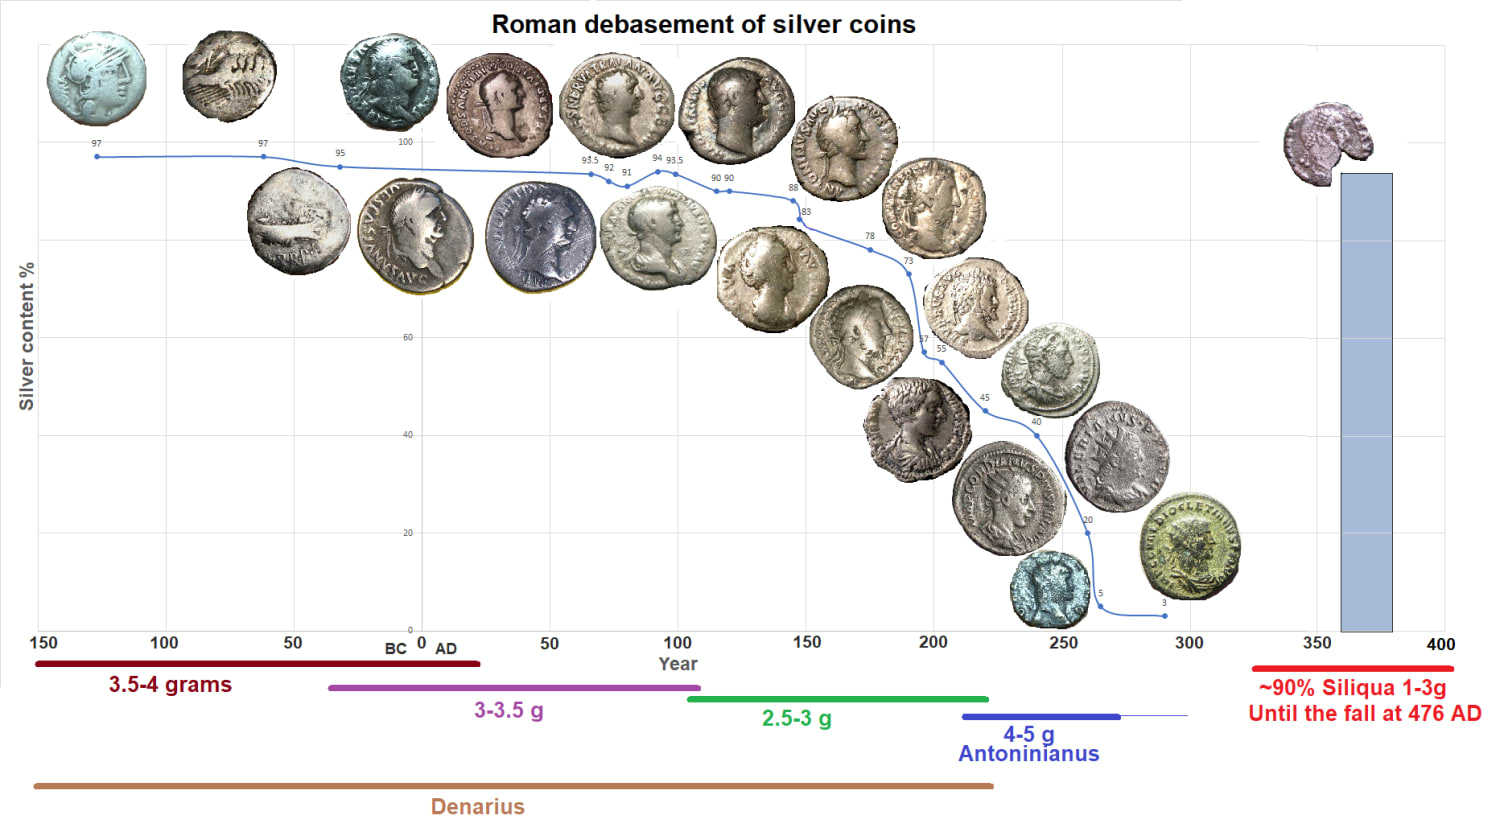 Roman debasement of silver coins through the centuries